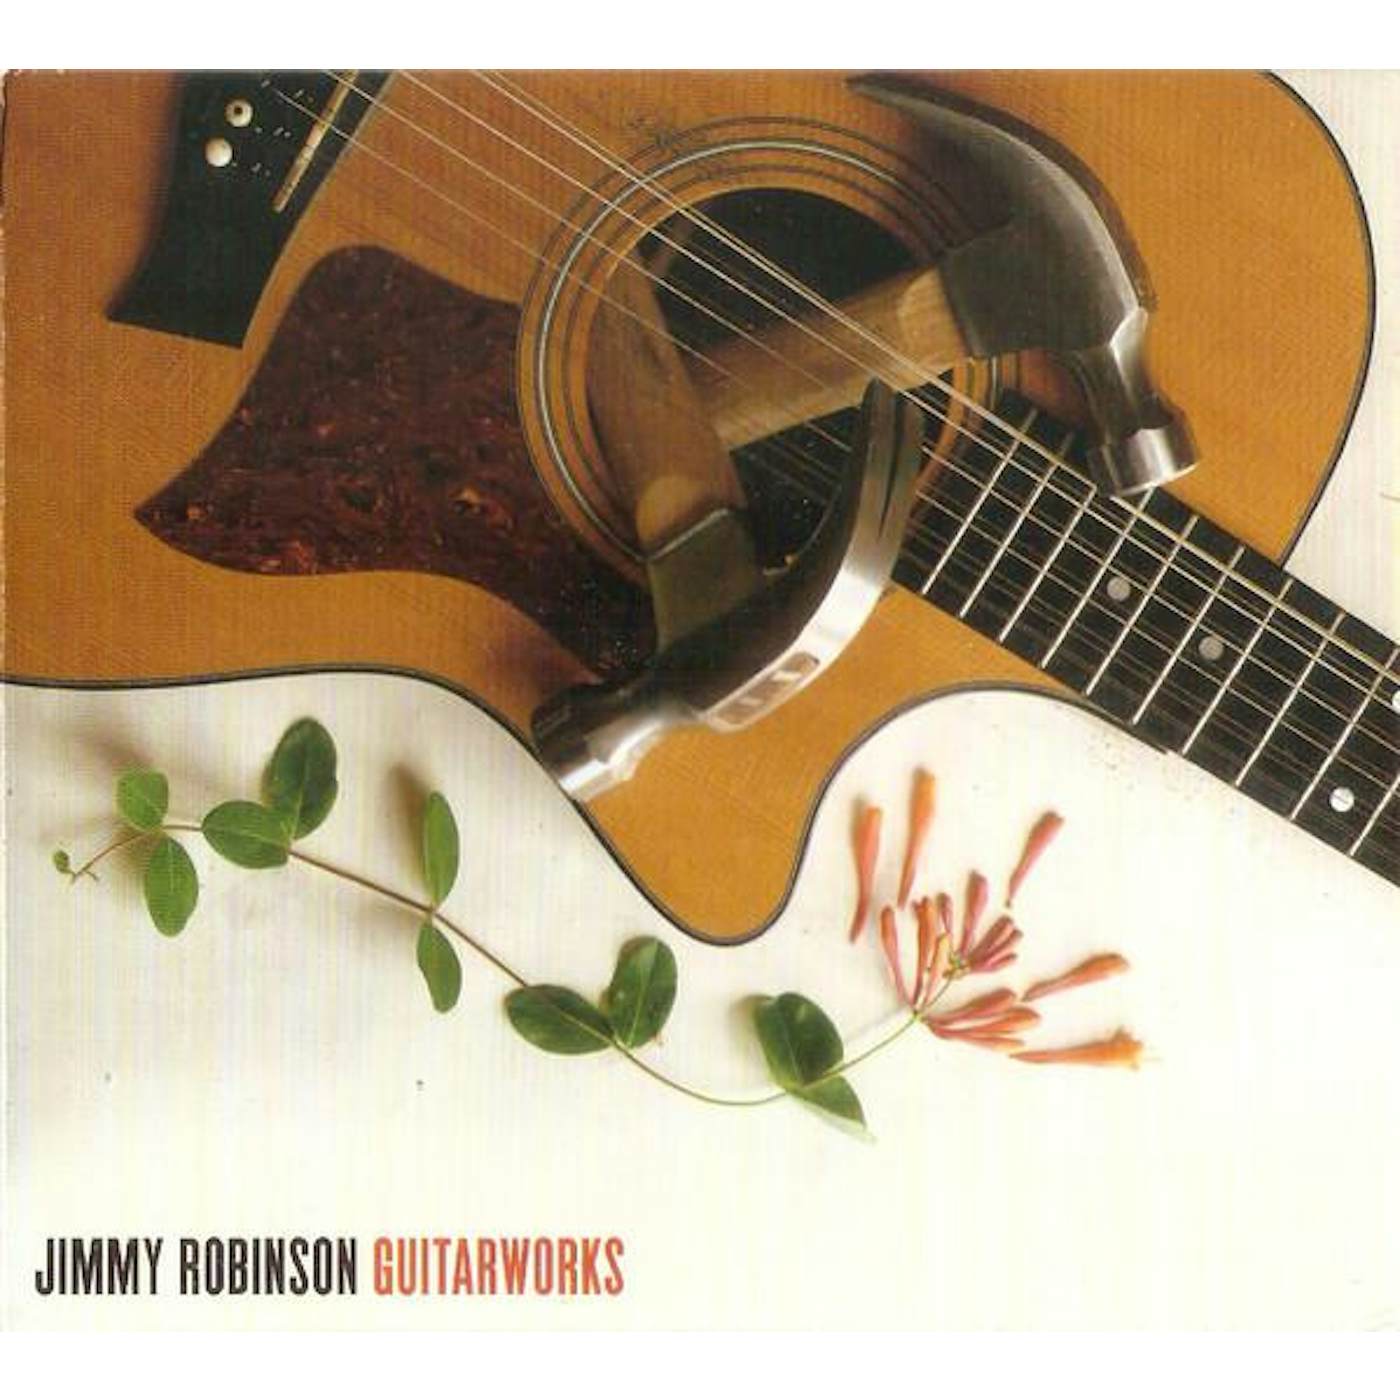 Jimmy Robinson Guitarworks CD